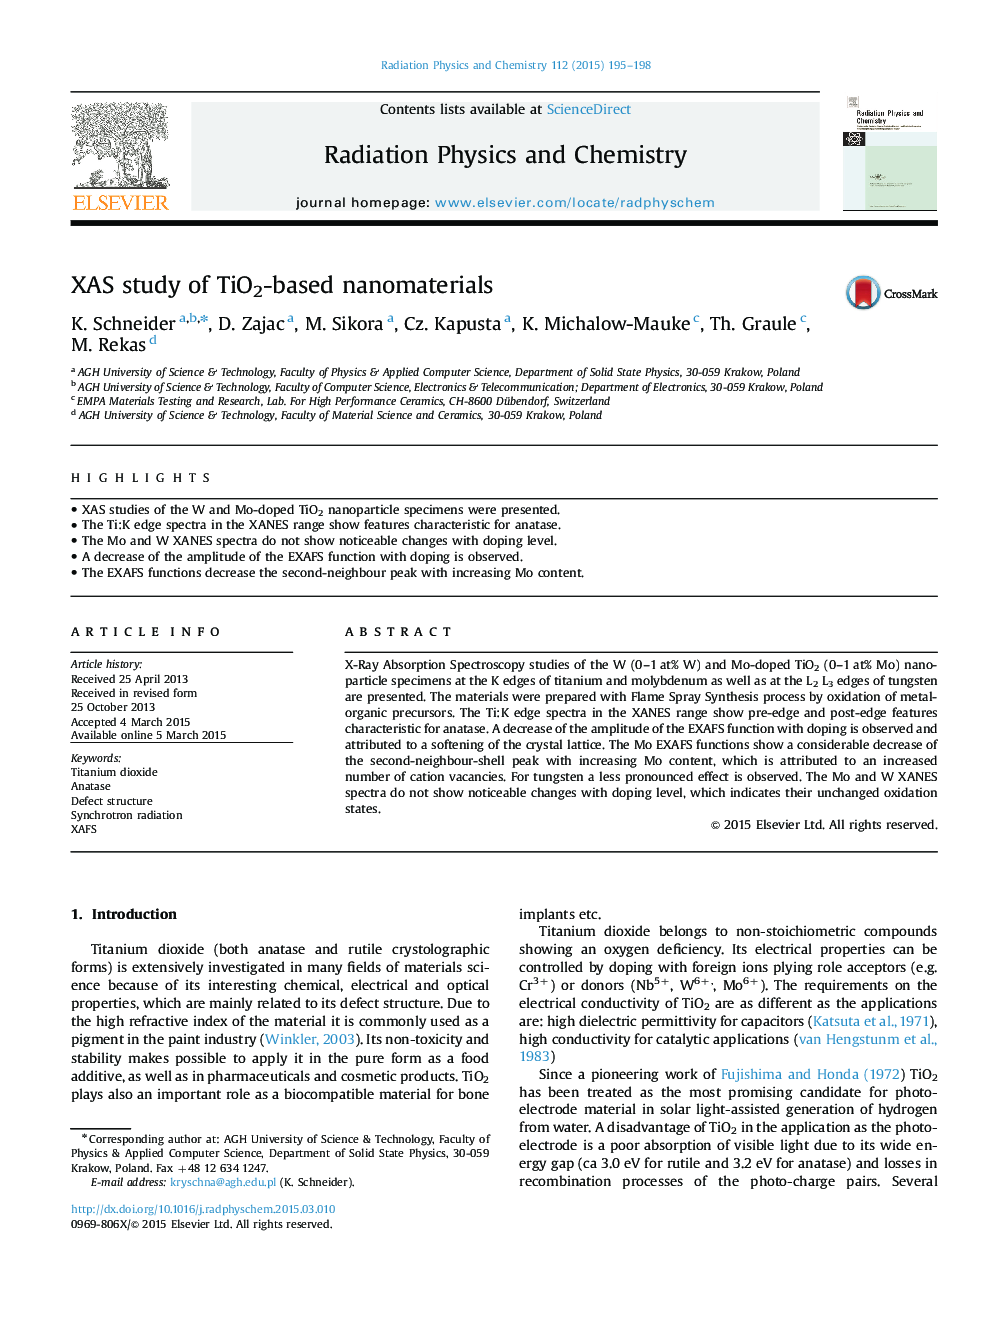 XAS study of TiO2-based nanomaterials